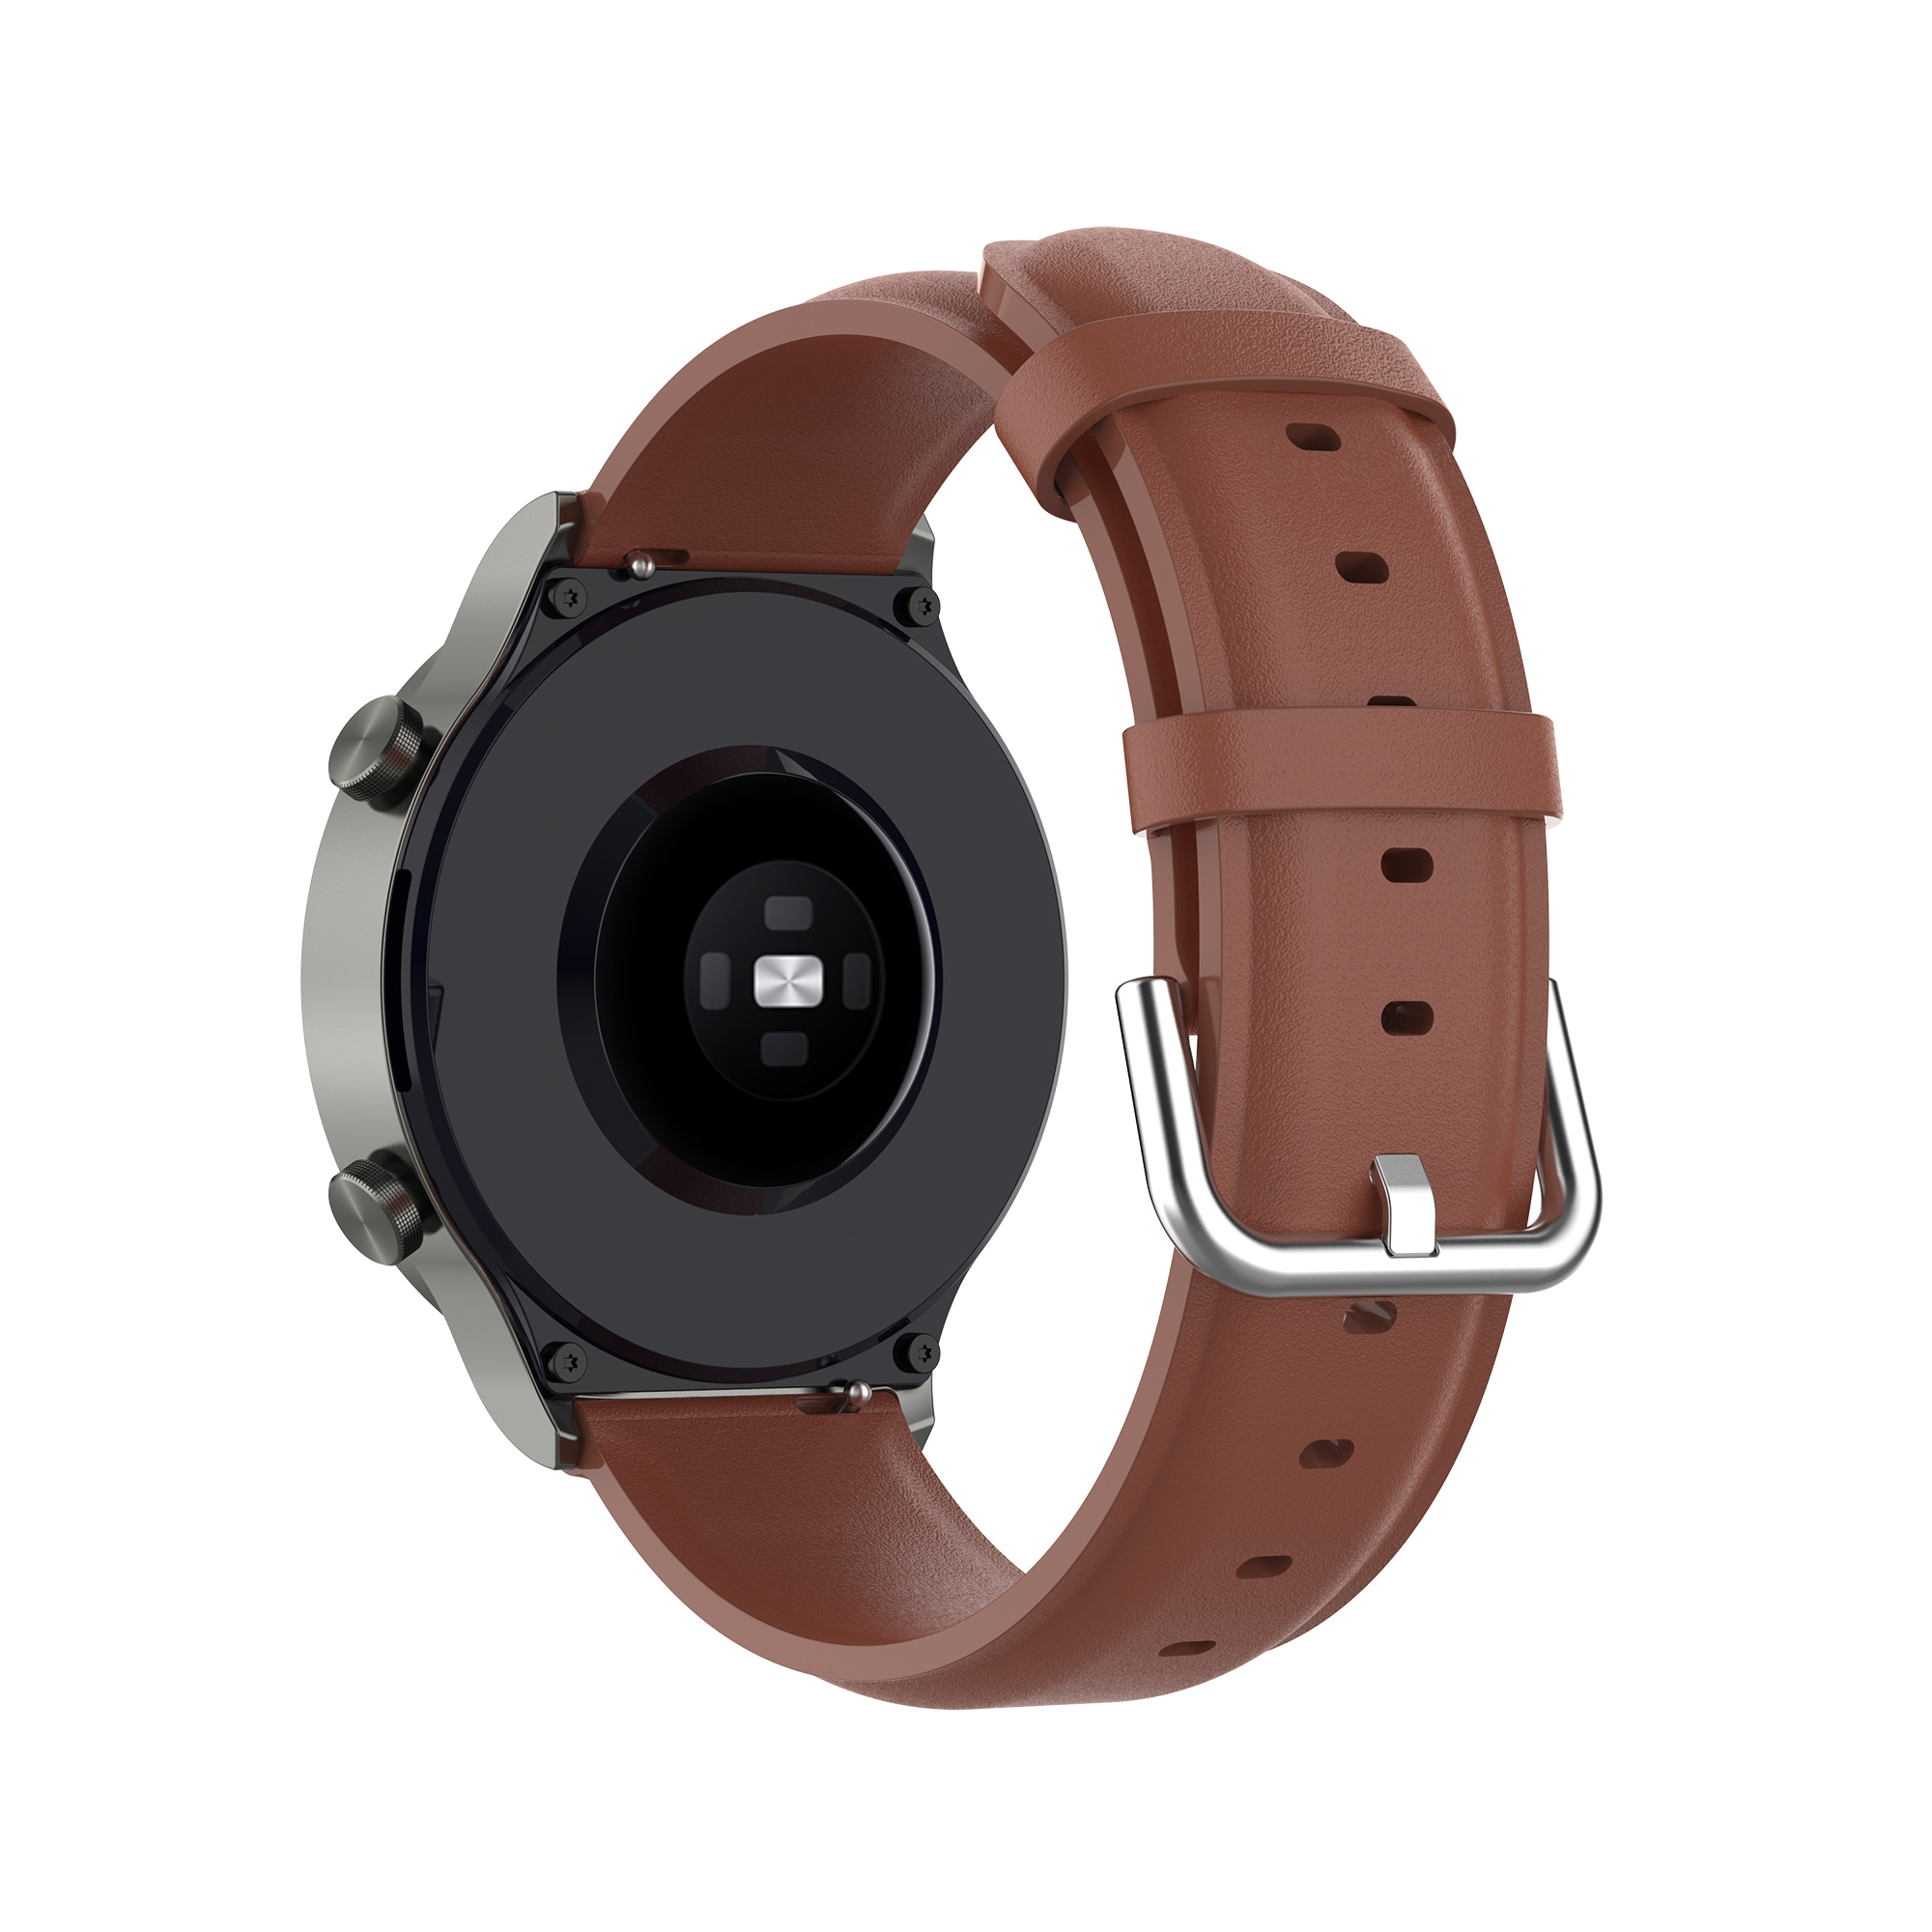 22mm-Universal-Watch-Band-Round-Tail-Leather-Watch-Strap-for-Huawei-Watch-GT2-Pro-Zeblaze-GTS-BW-HL3-1765660-37